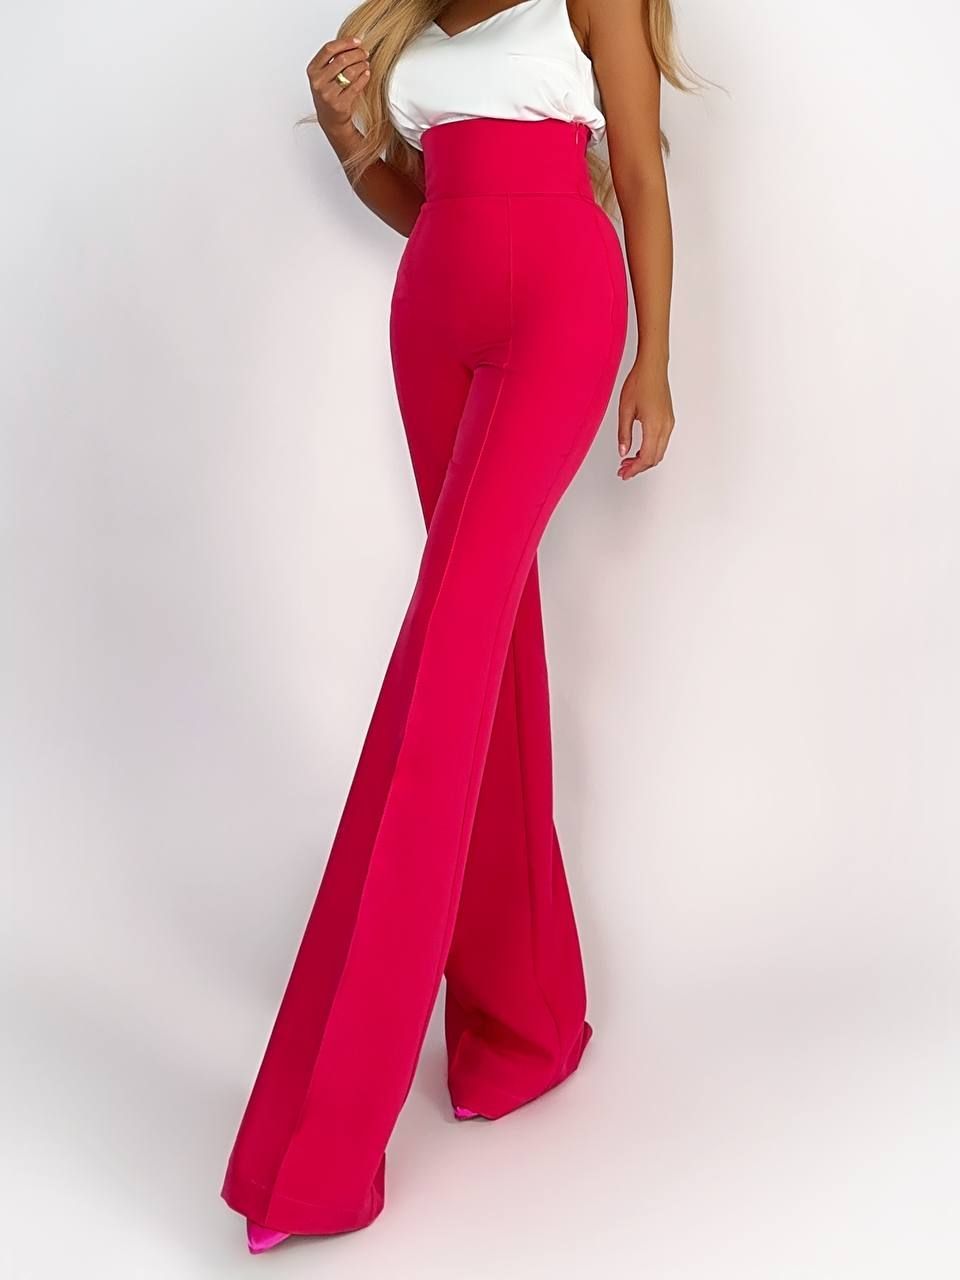 Victoria High Waisted Dress Pants - Ruby